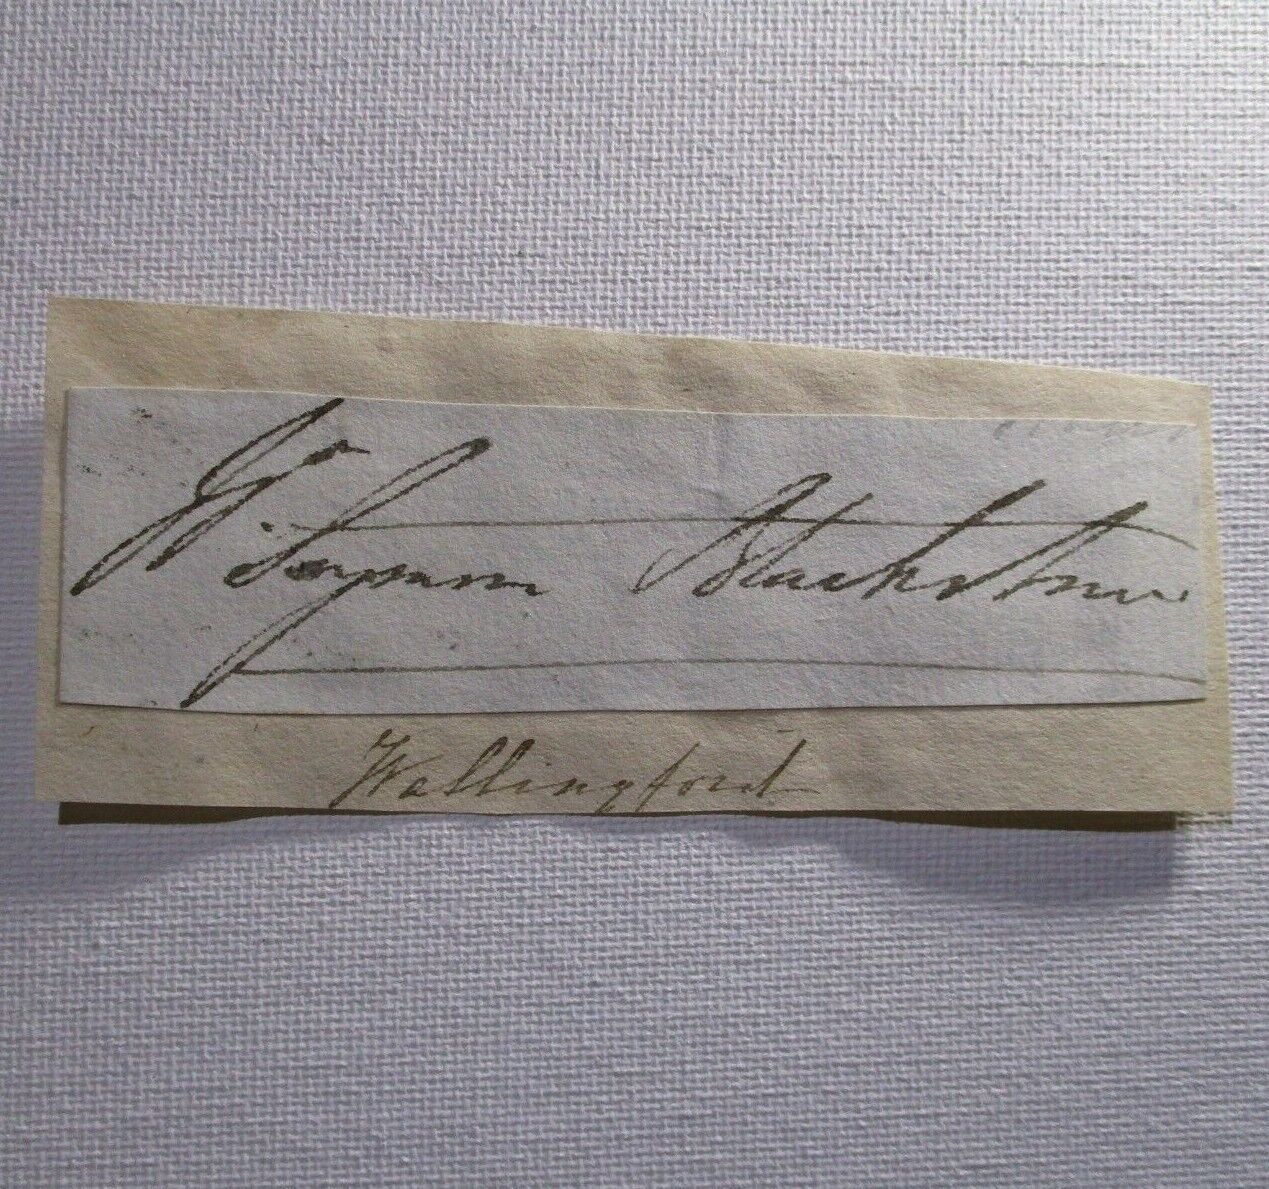 William Seymour Blackstone Autograph, Signature 1809-1881 Parliament Wallingford